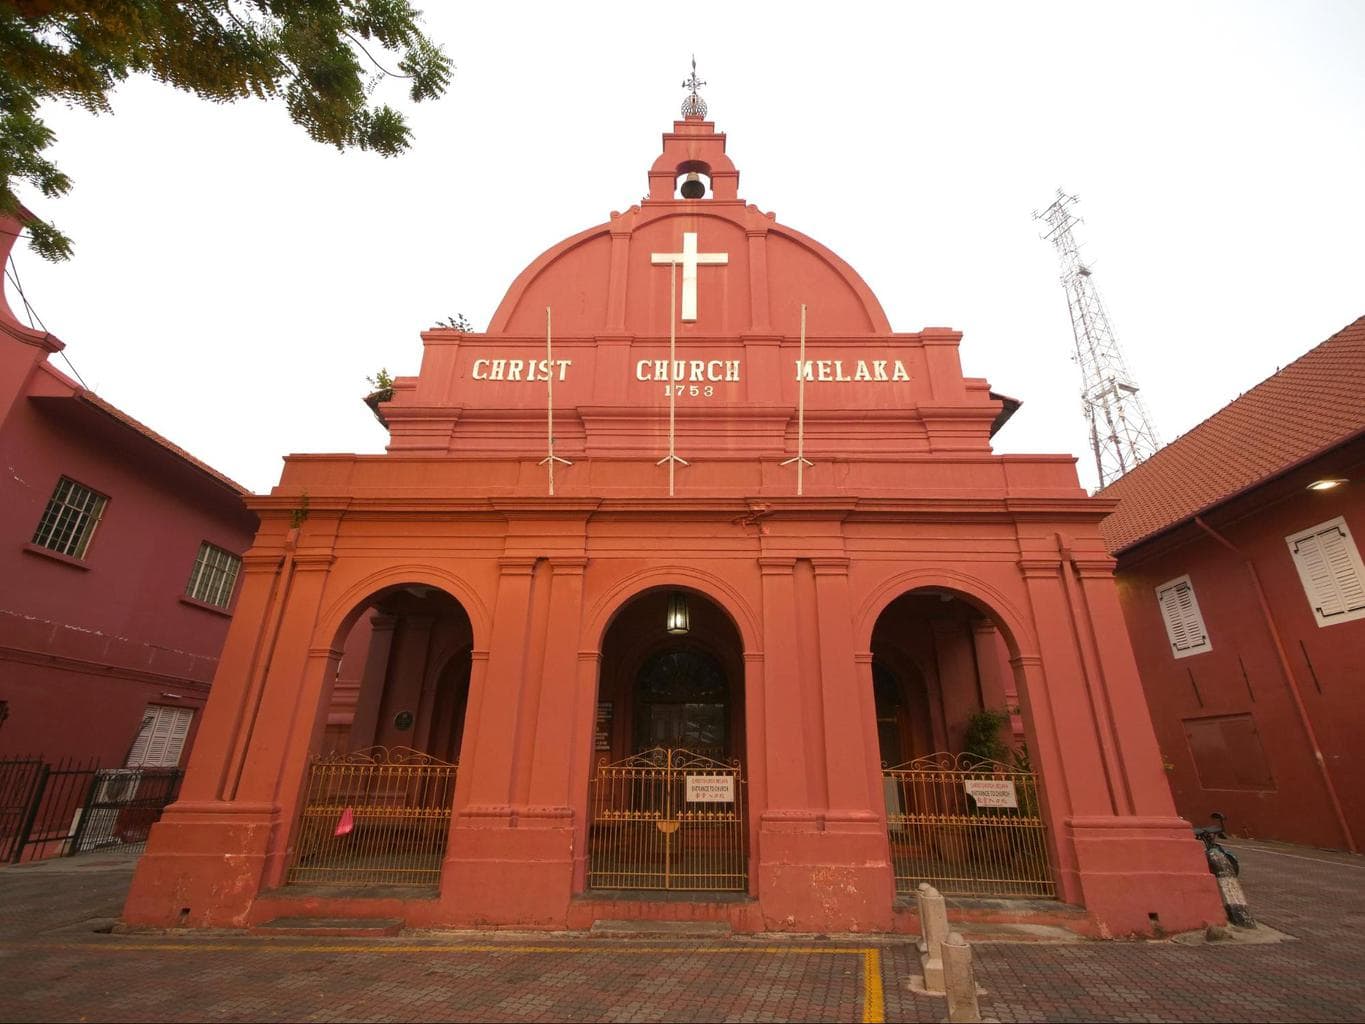 Christ Church in Malacca